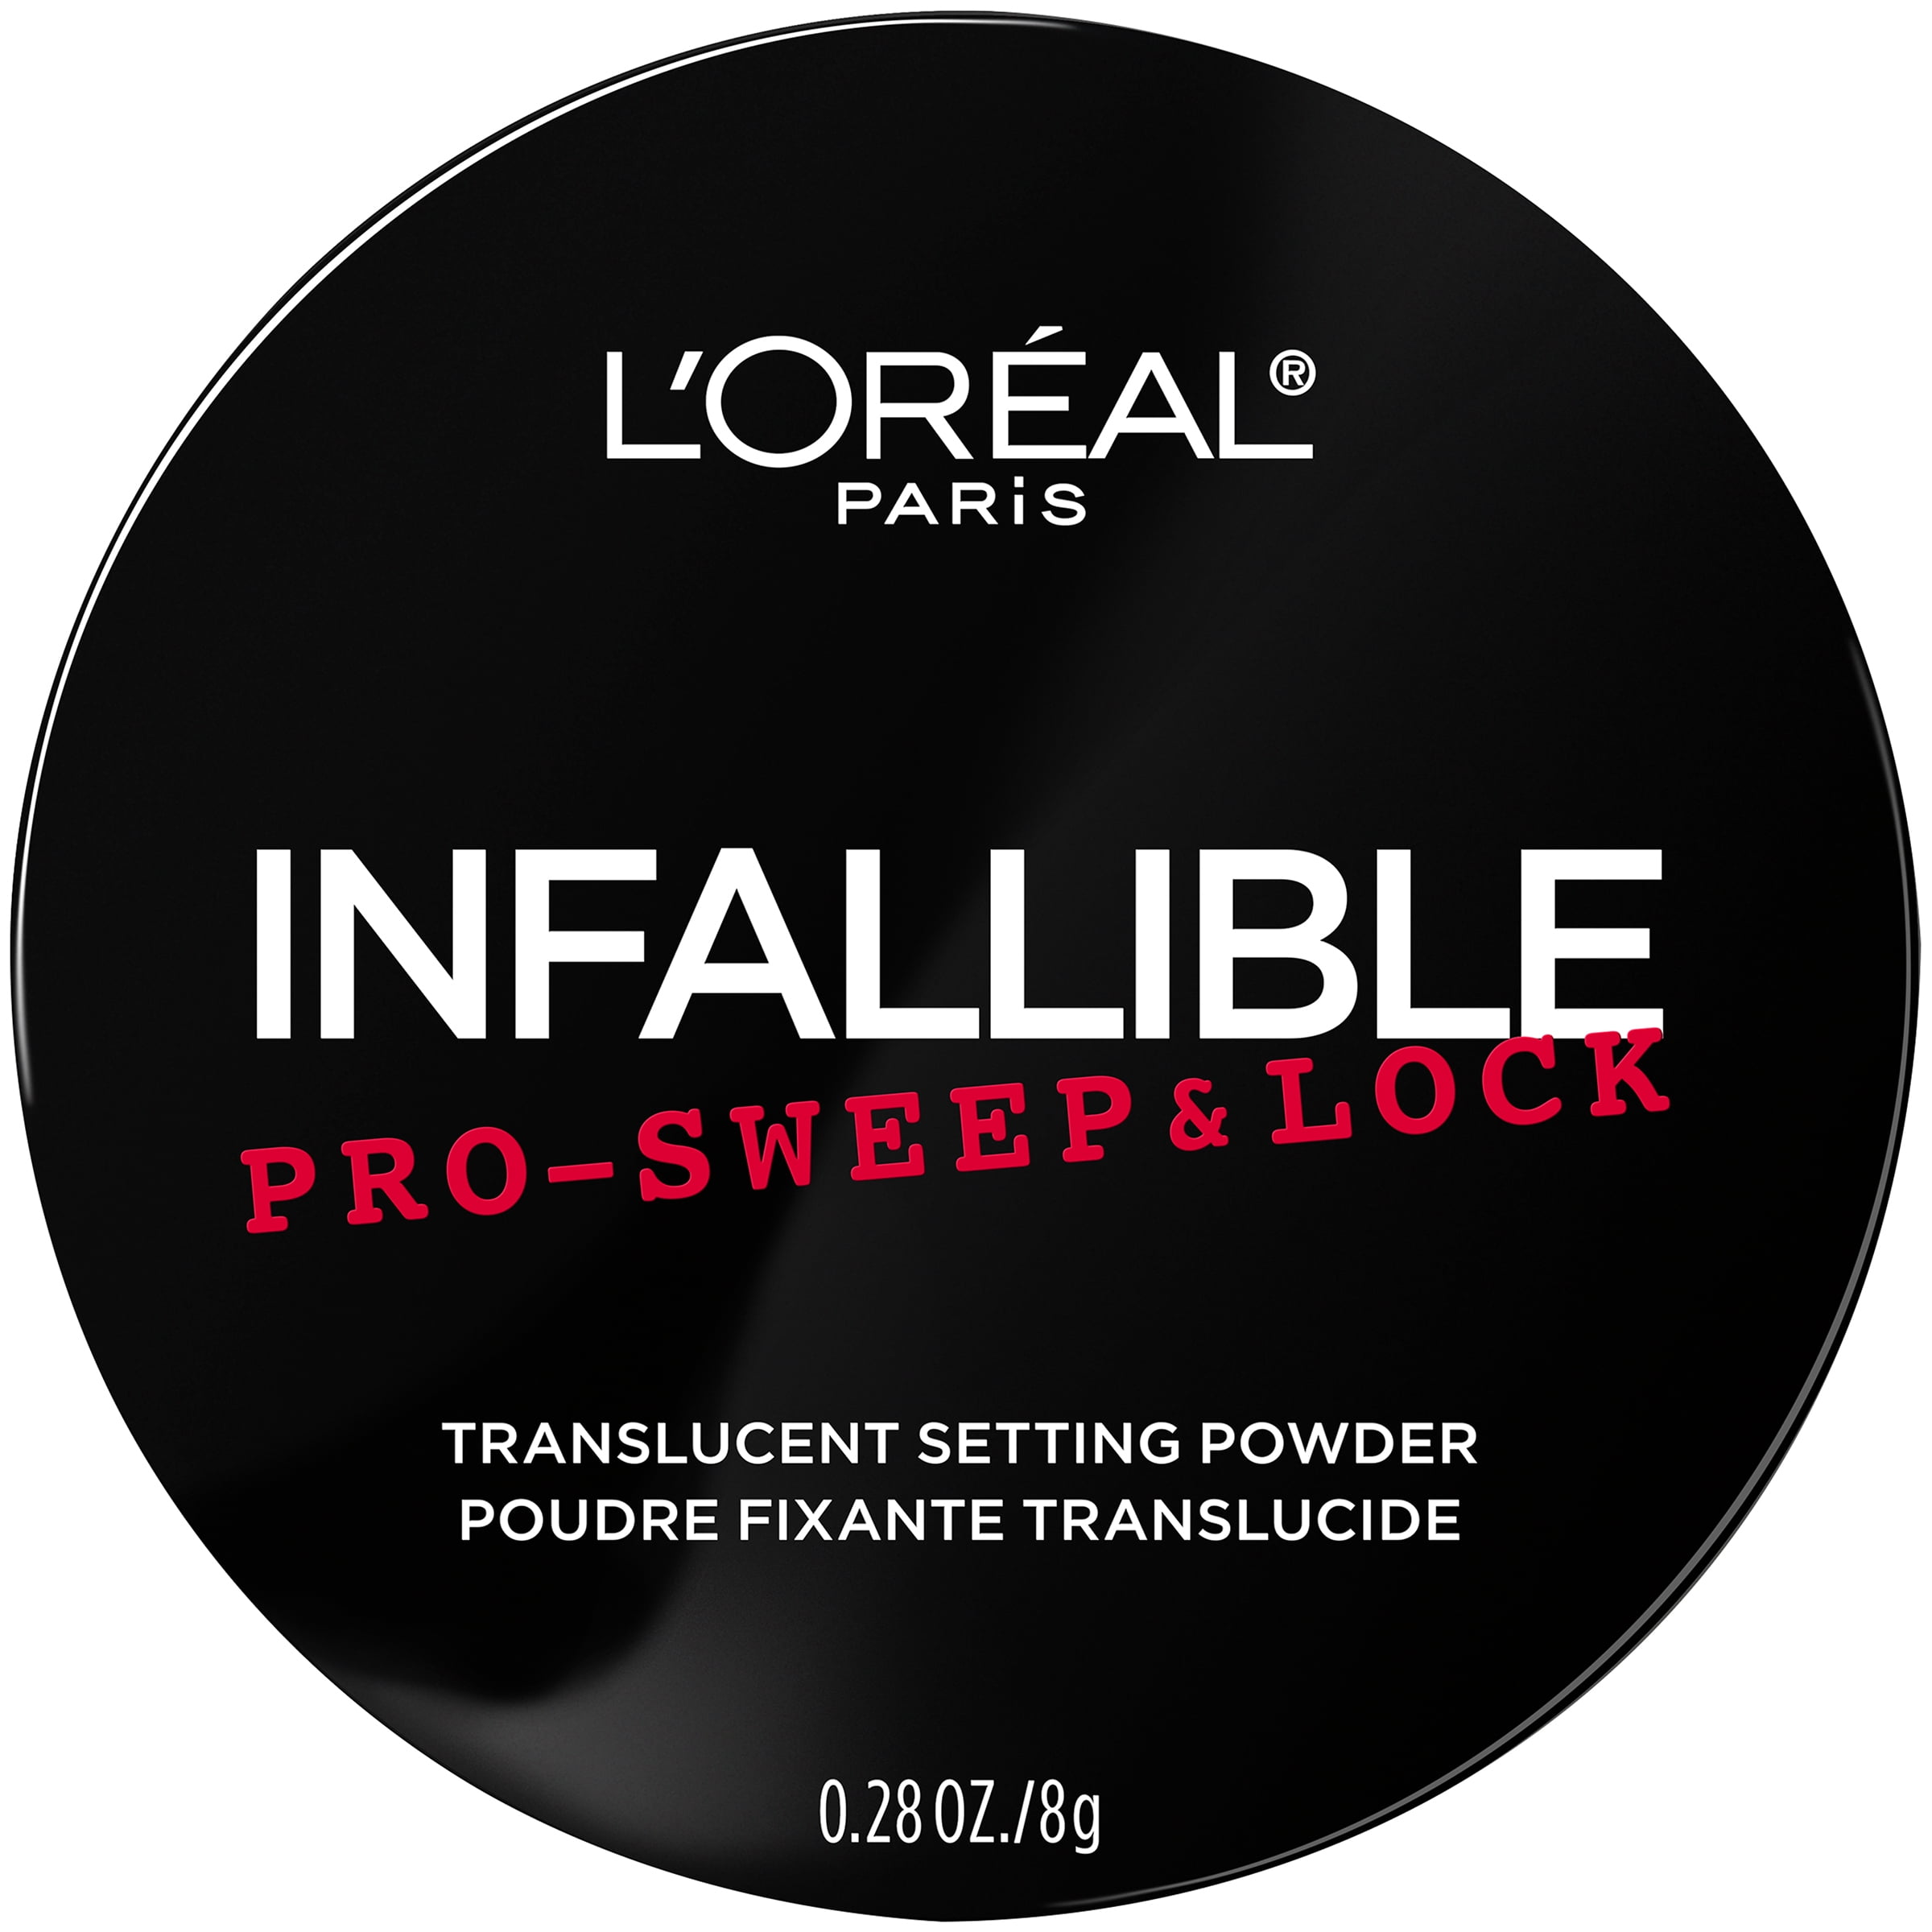 L'Oreal Paris Infallible Pro Sweep & Lock Loose Setting Powder, Translucent, 0.28 oz